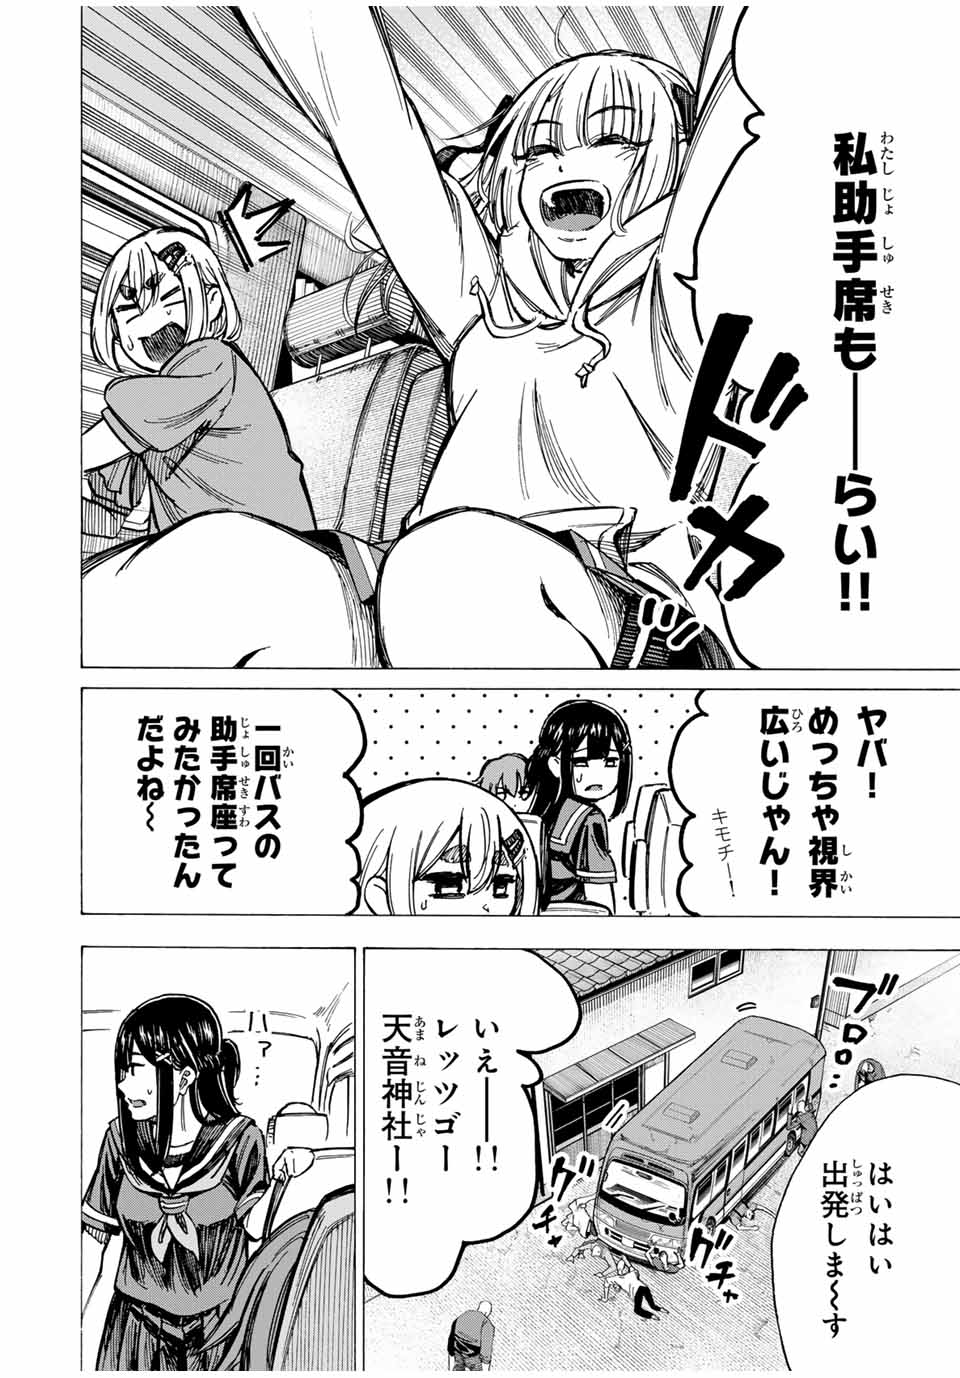 Kaminagashijima – Rinne no Miko - Chapter 22 - Page 2